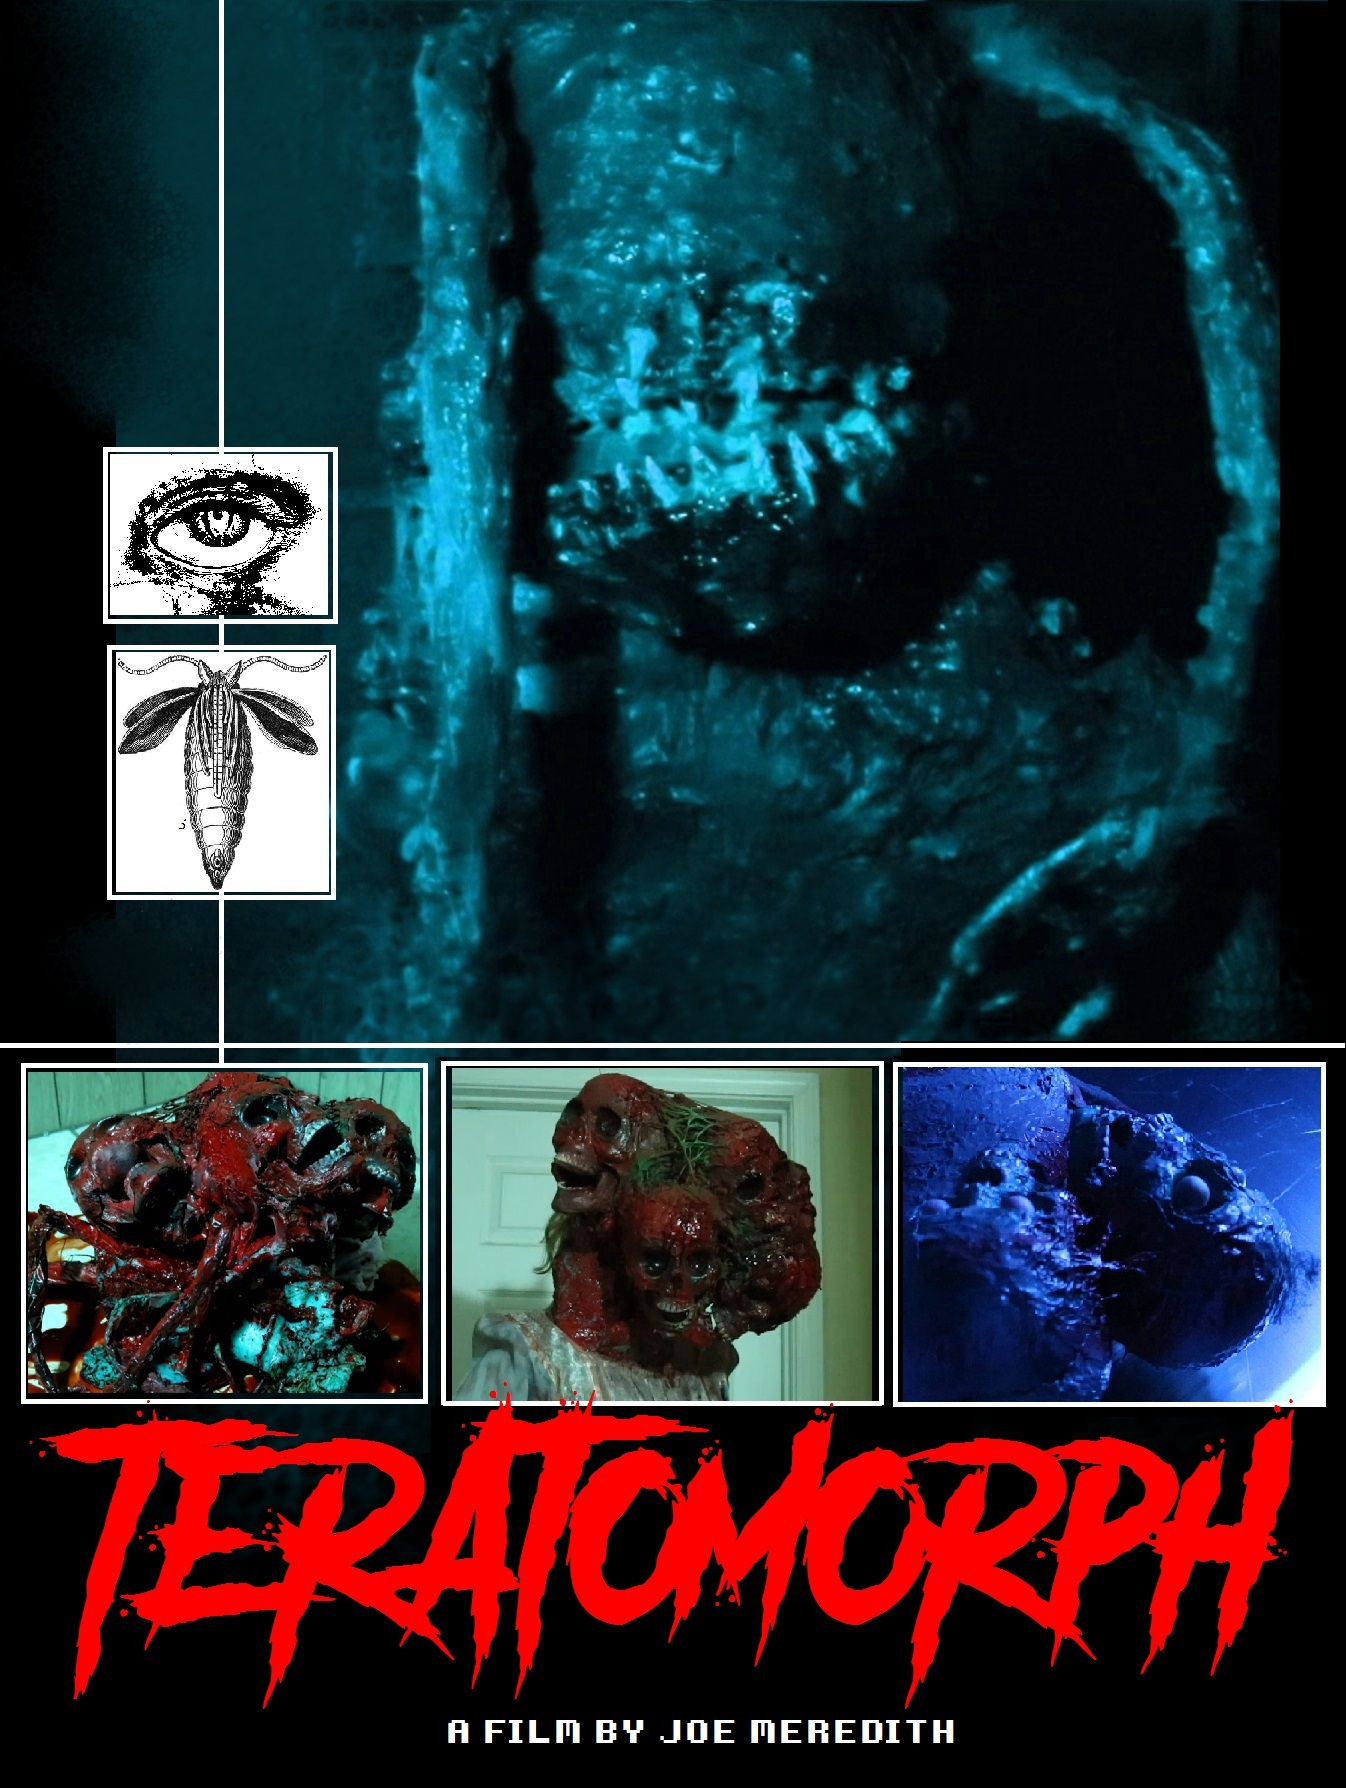 Teratomorph (2019)